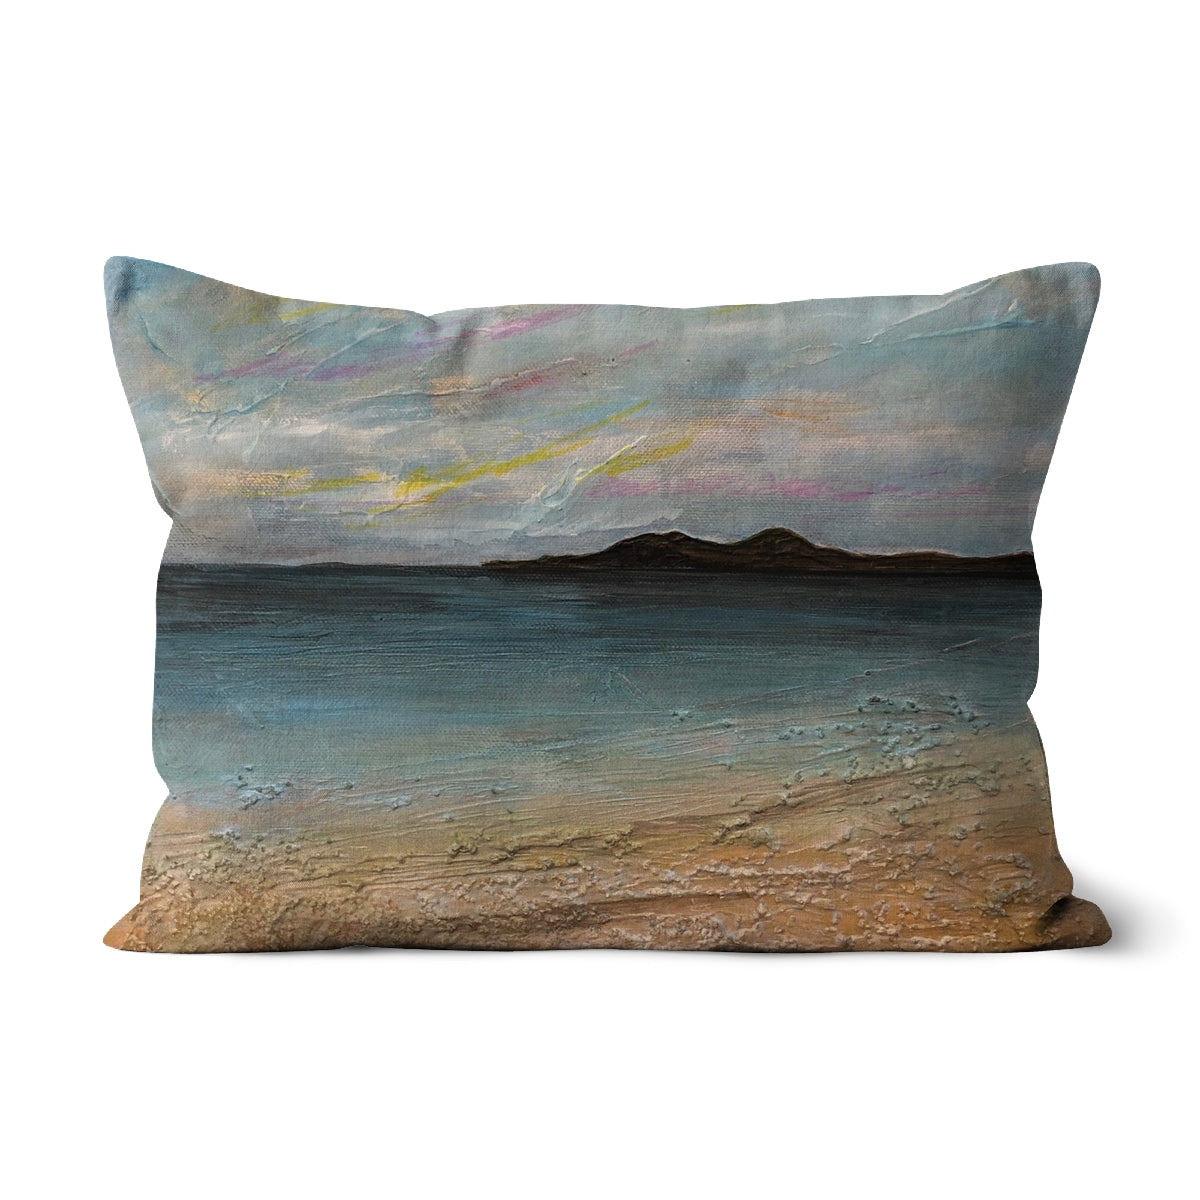 Garrynamonie Beach South Uist Art Gifts Cushion-Cushions-Hebridean Islands Art Gallery-Canvas-19"x13"-Paintings, Prints, Homeware, Art Gifts From Scotland By Scottish Artist Kevin Hunter